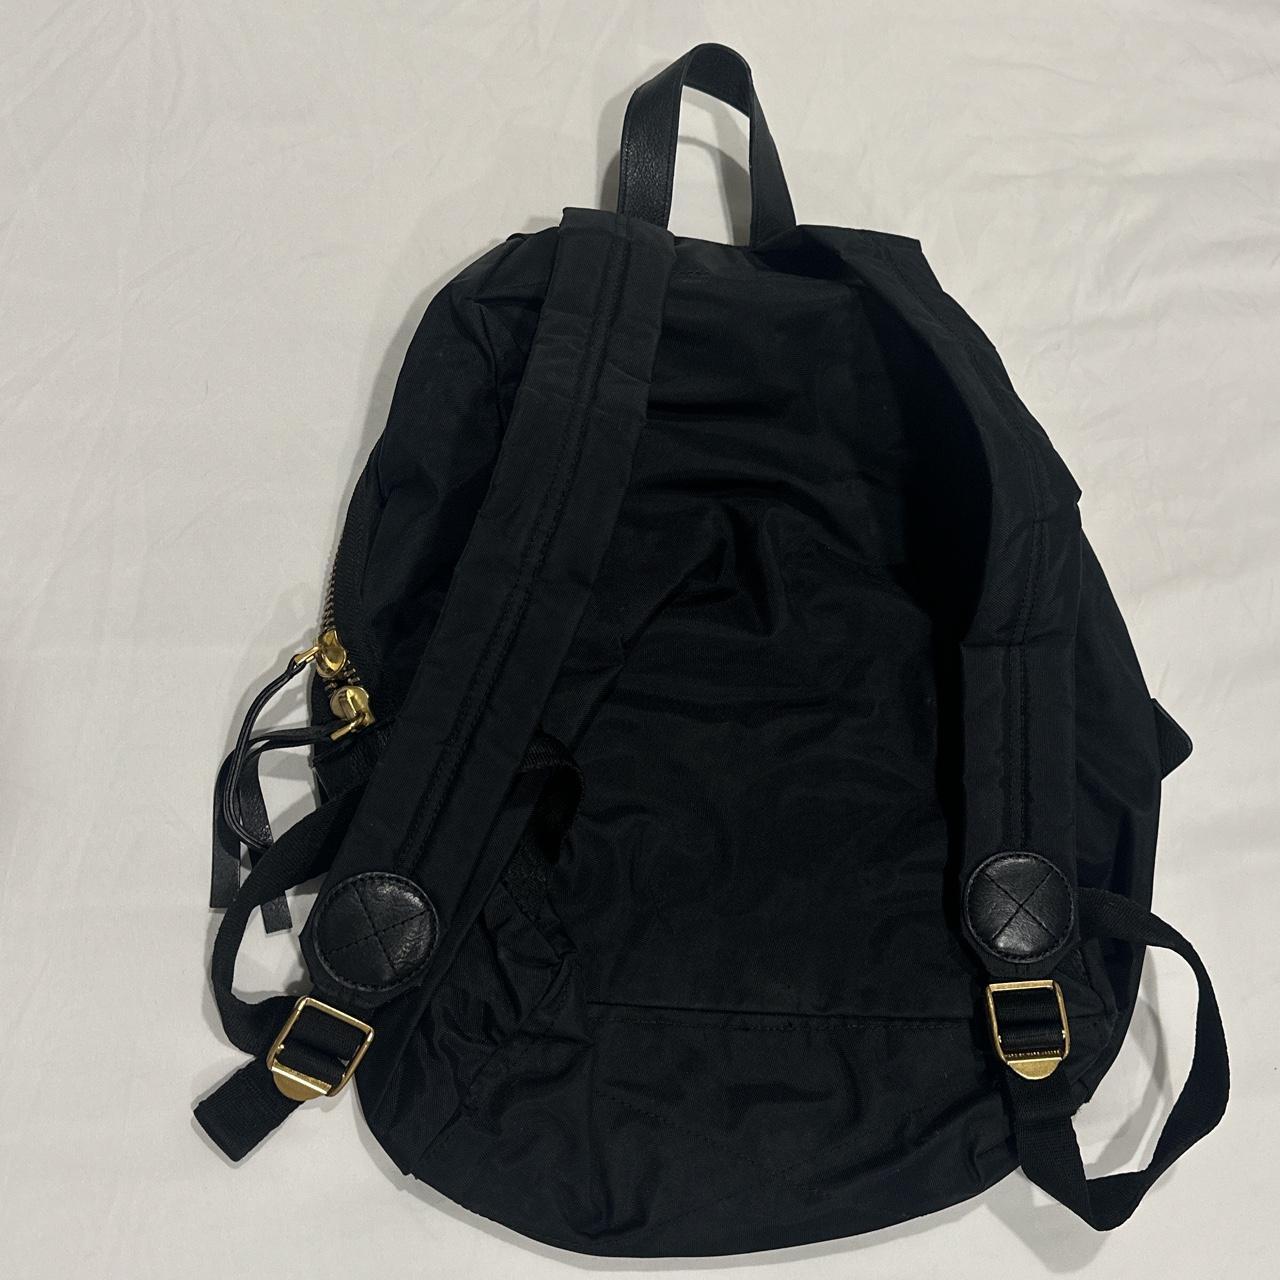 Marc Jacobs backpack Black and gold Lightly worn... - Depop